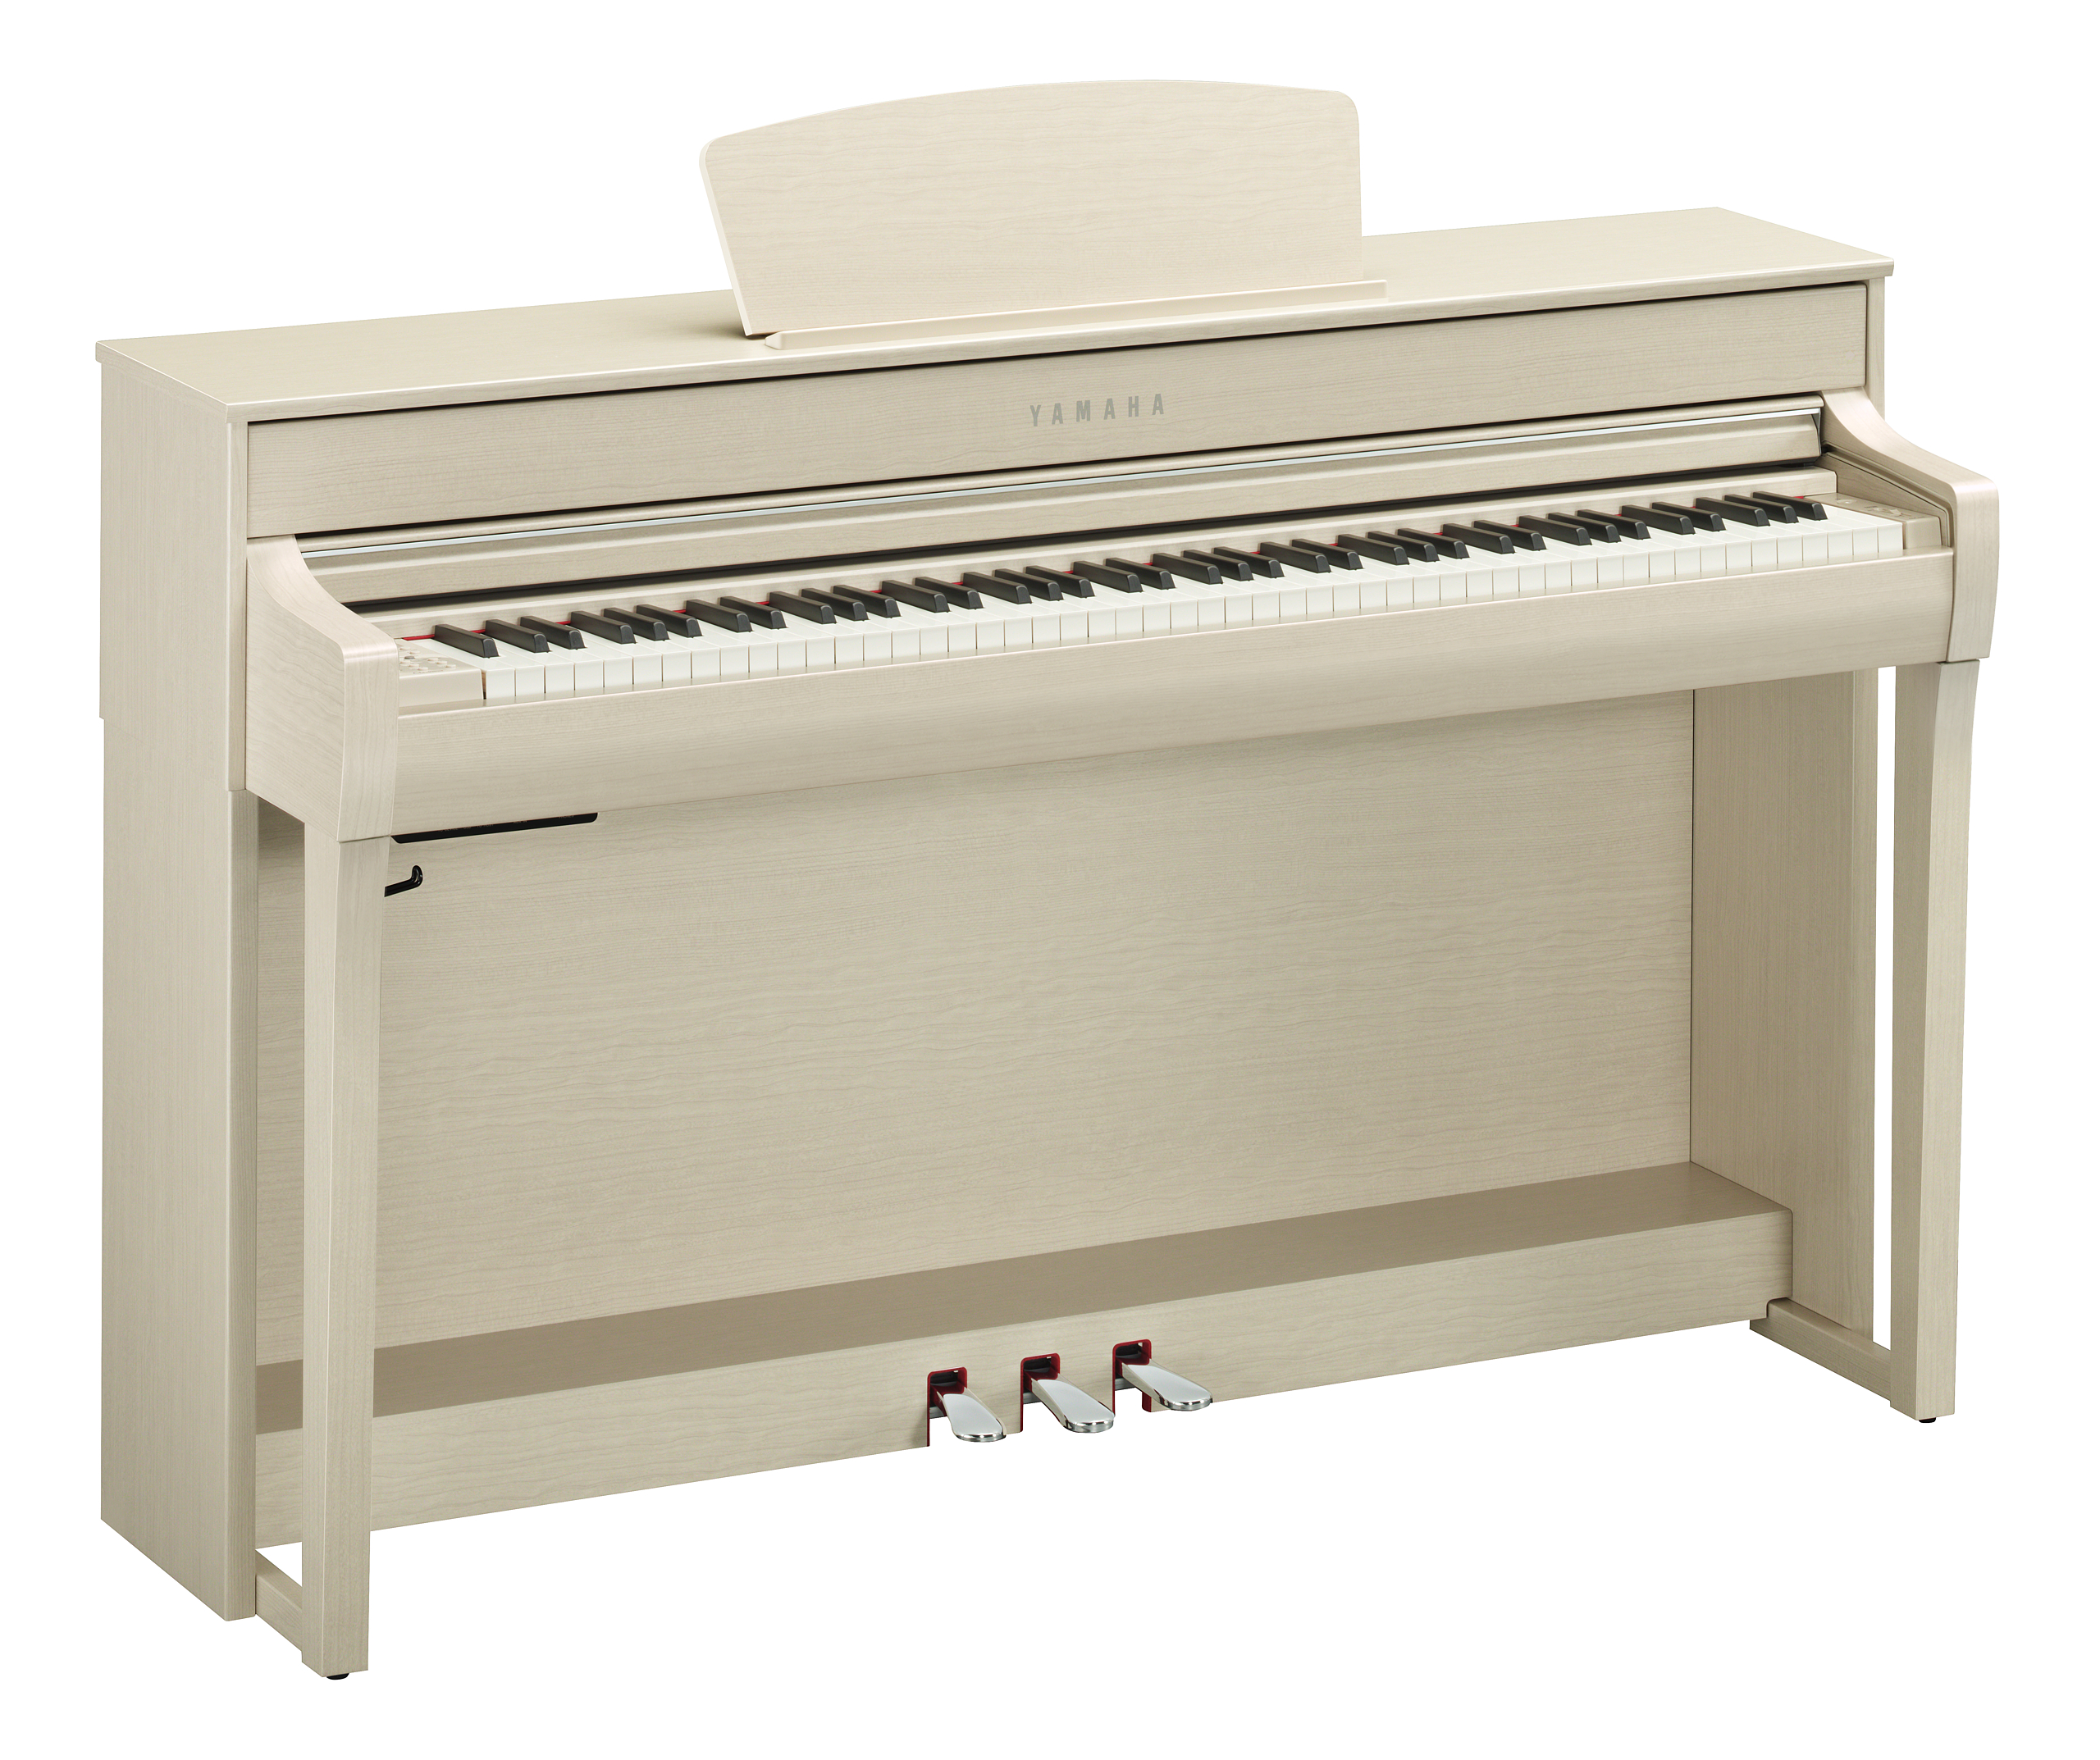 Yamaha Clp735wa - Digitalpiano mit Stand - Variation 1